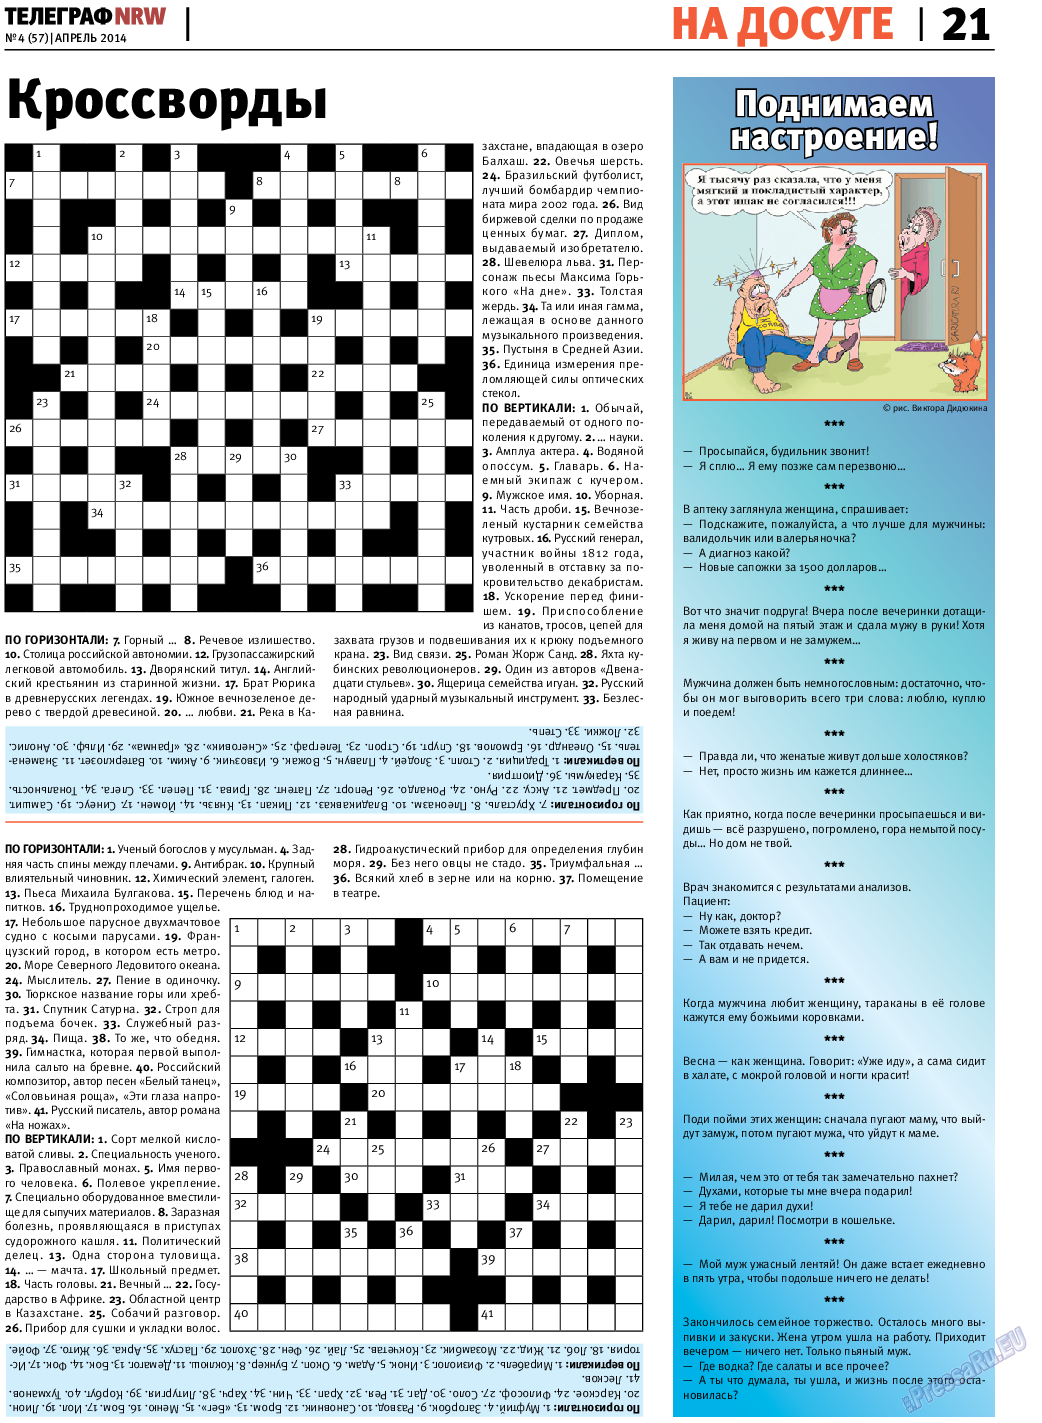 Телеграф NRW, газета. 2014 №4 стр.21